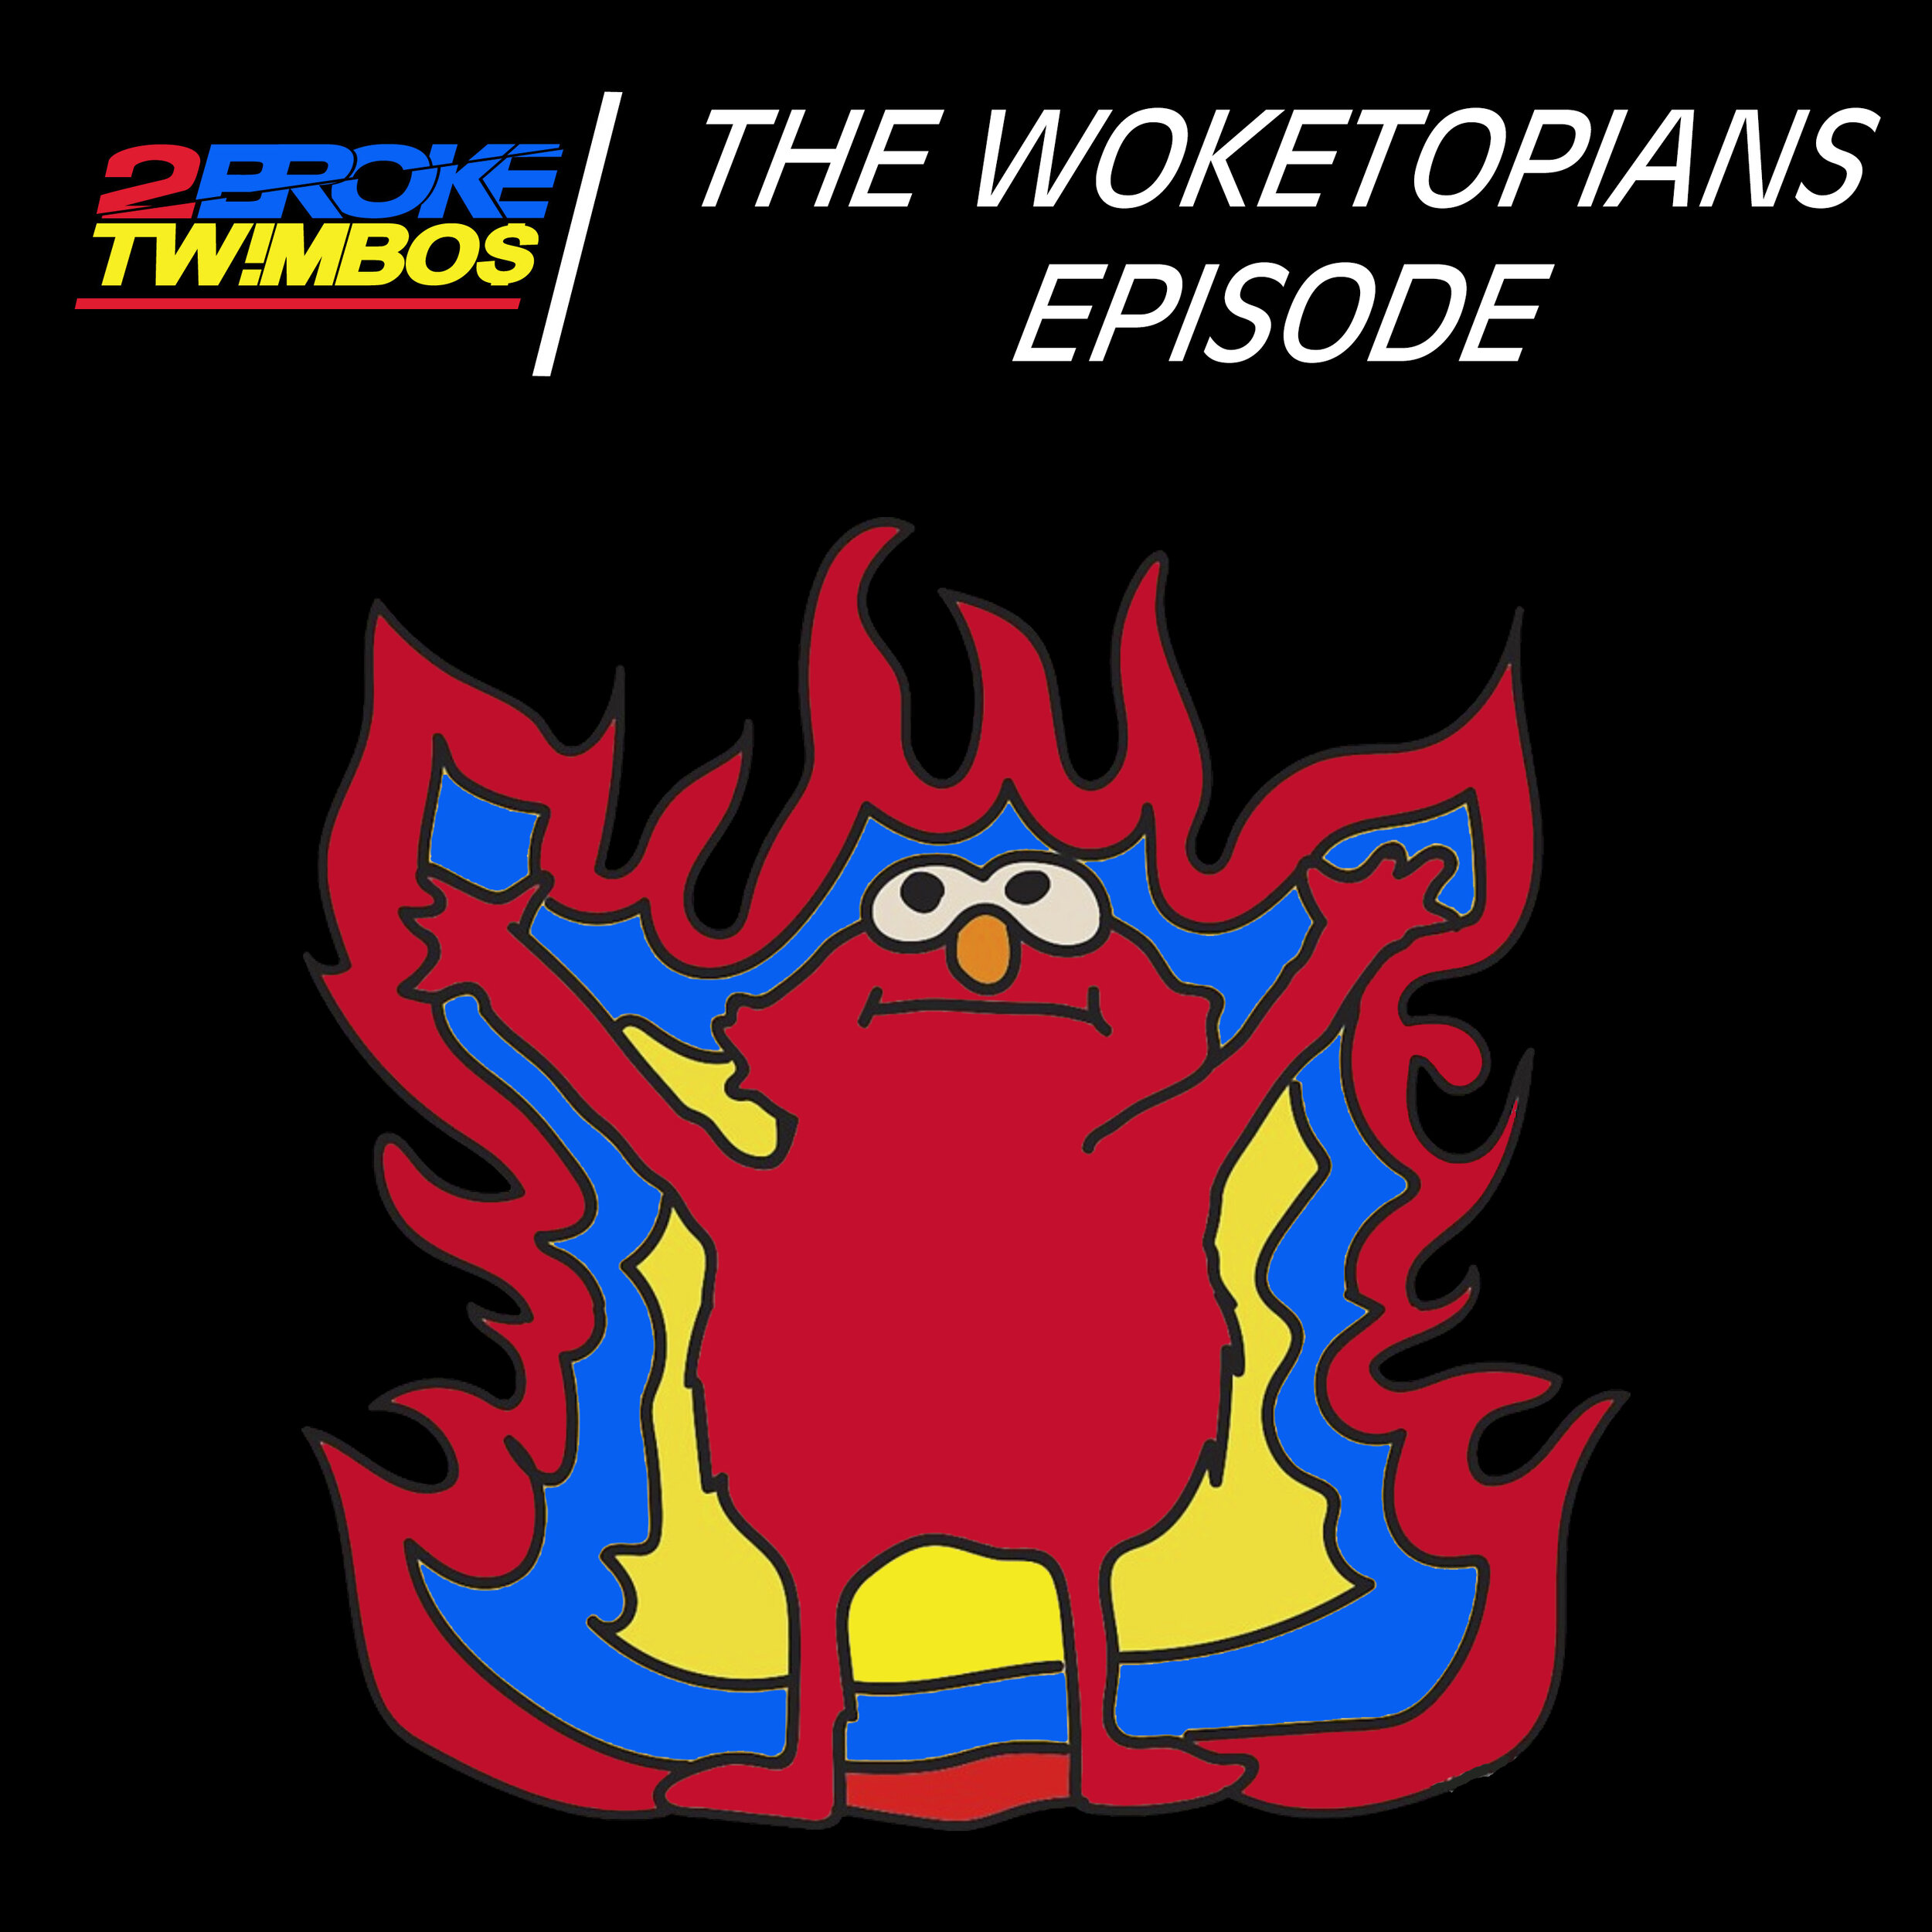 The Woketopians Episode